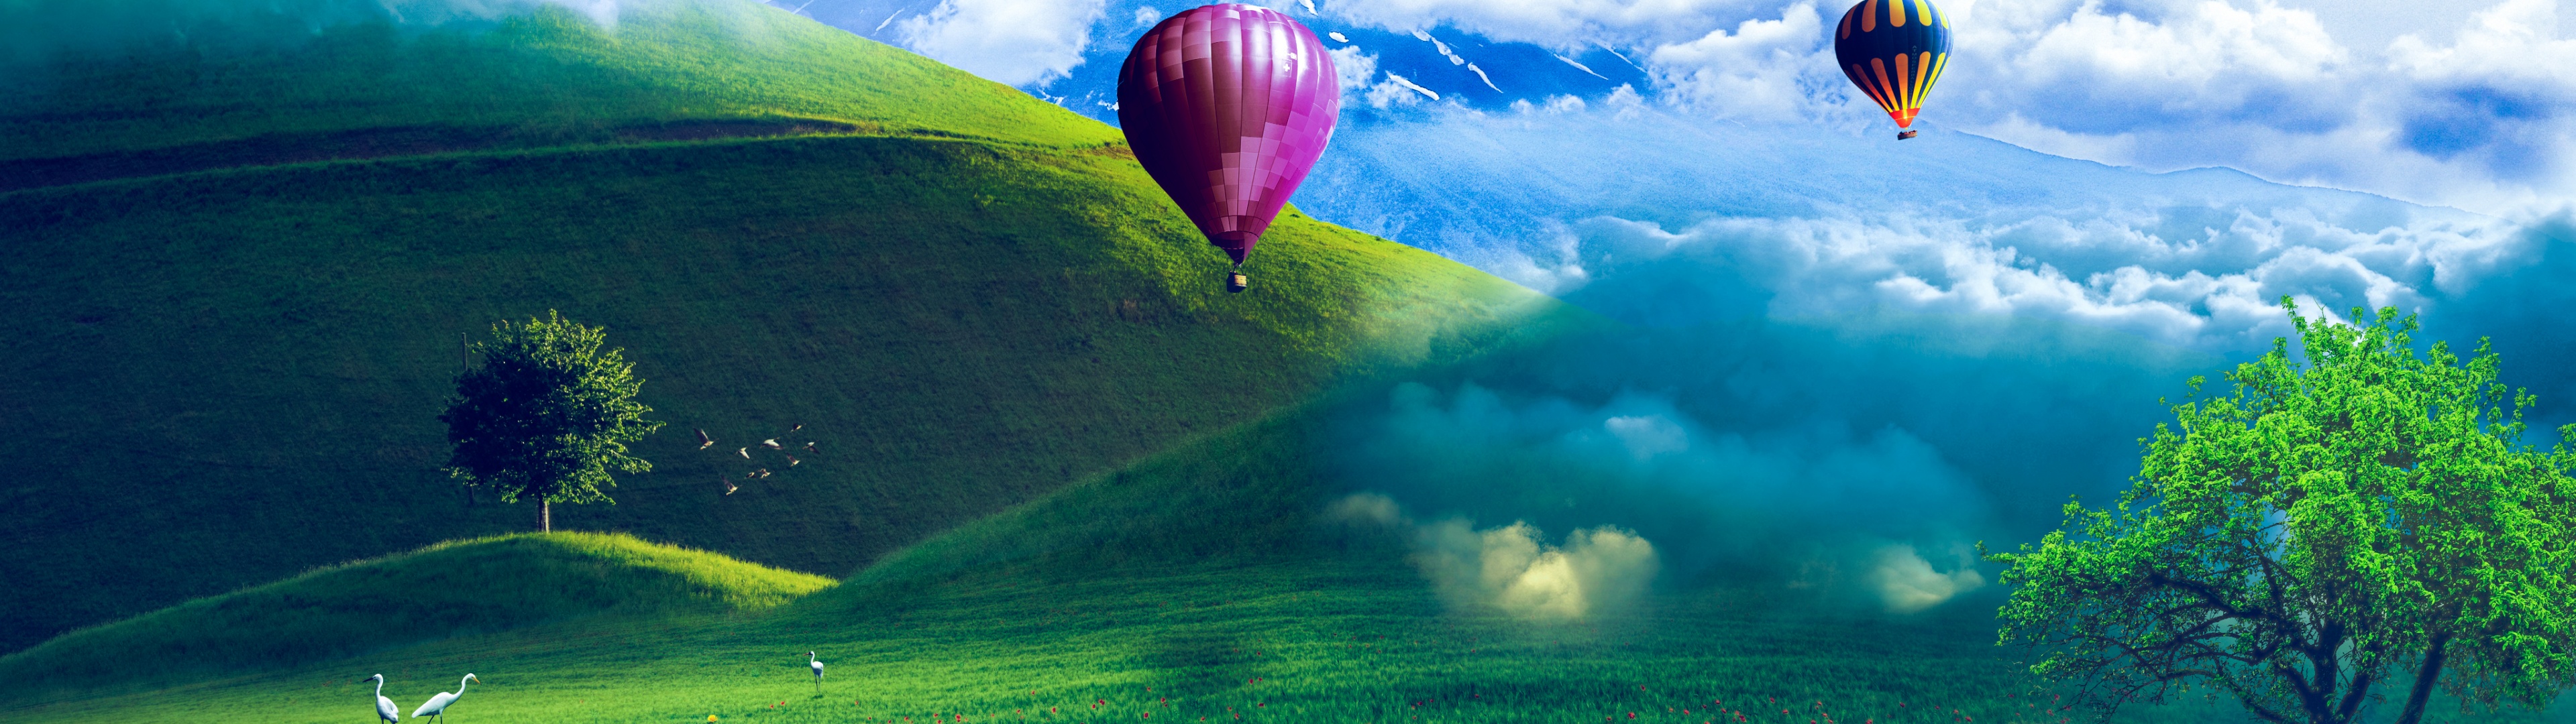 Hot air balloons Wallpaper 4K, Scenery, Landscape, Greenery